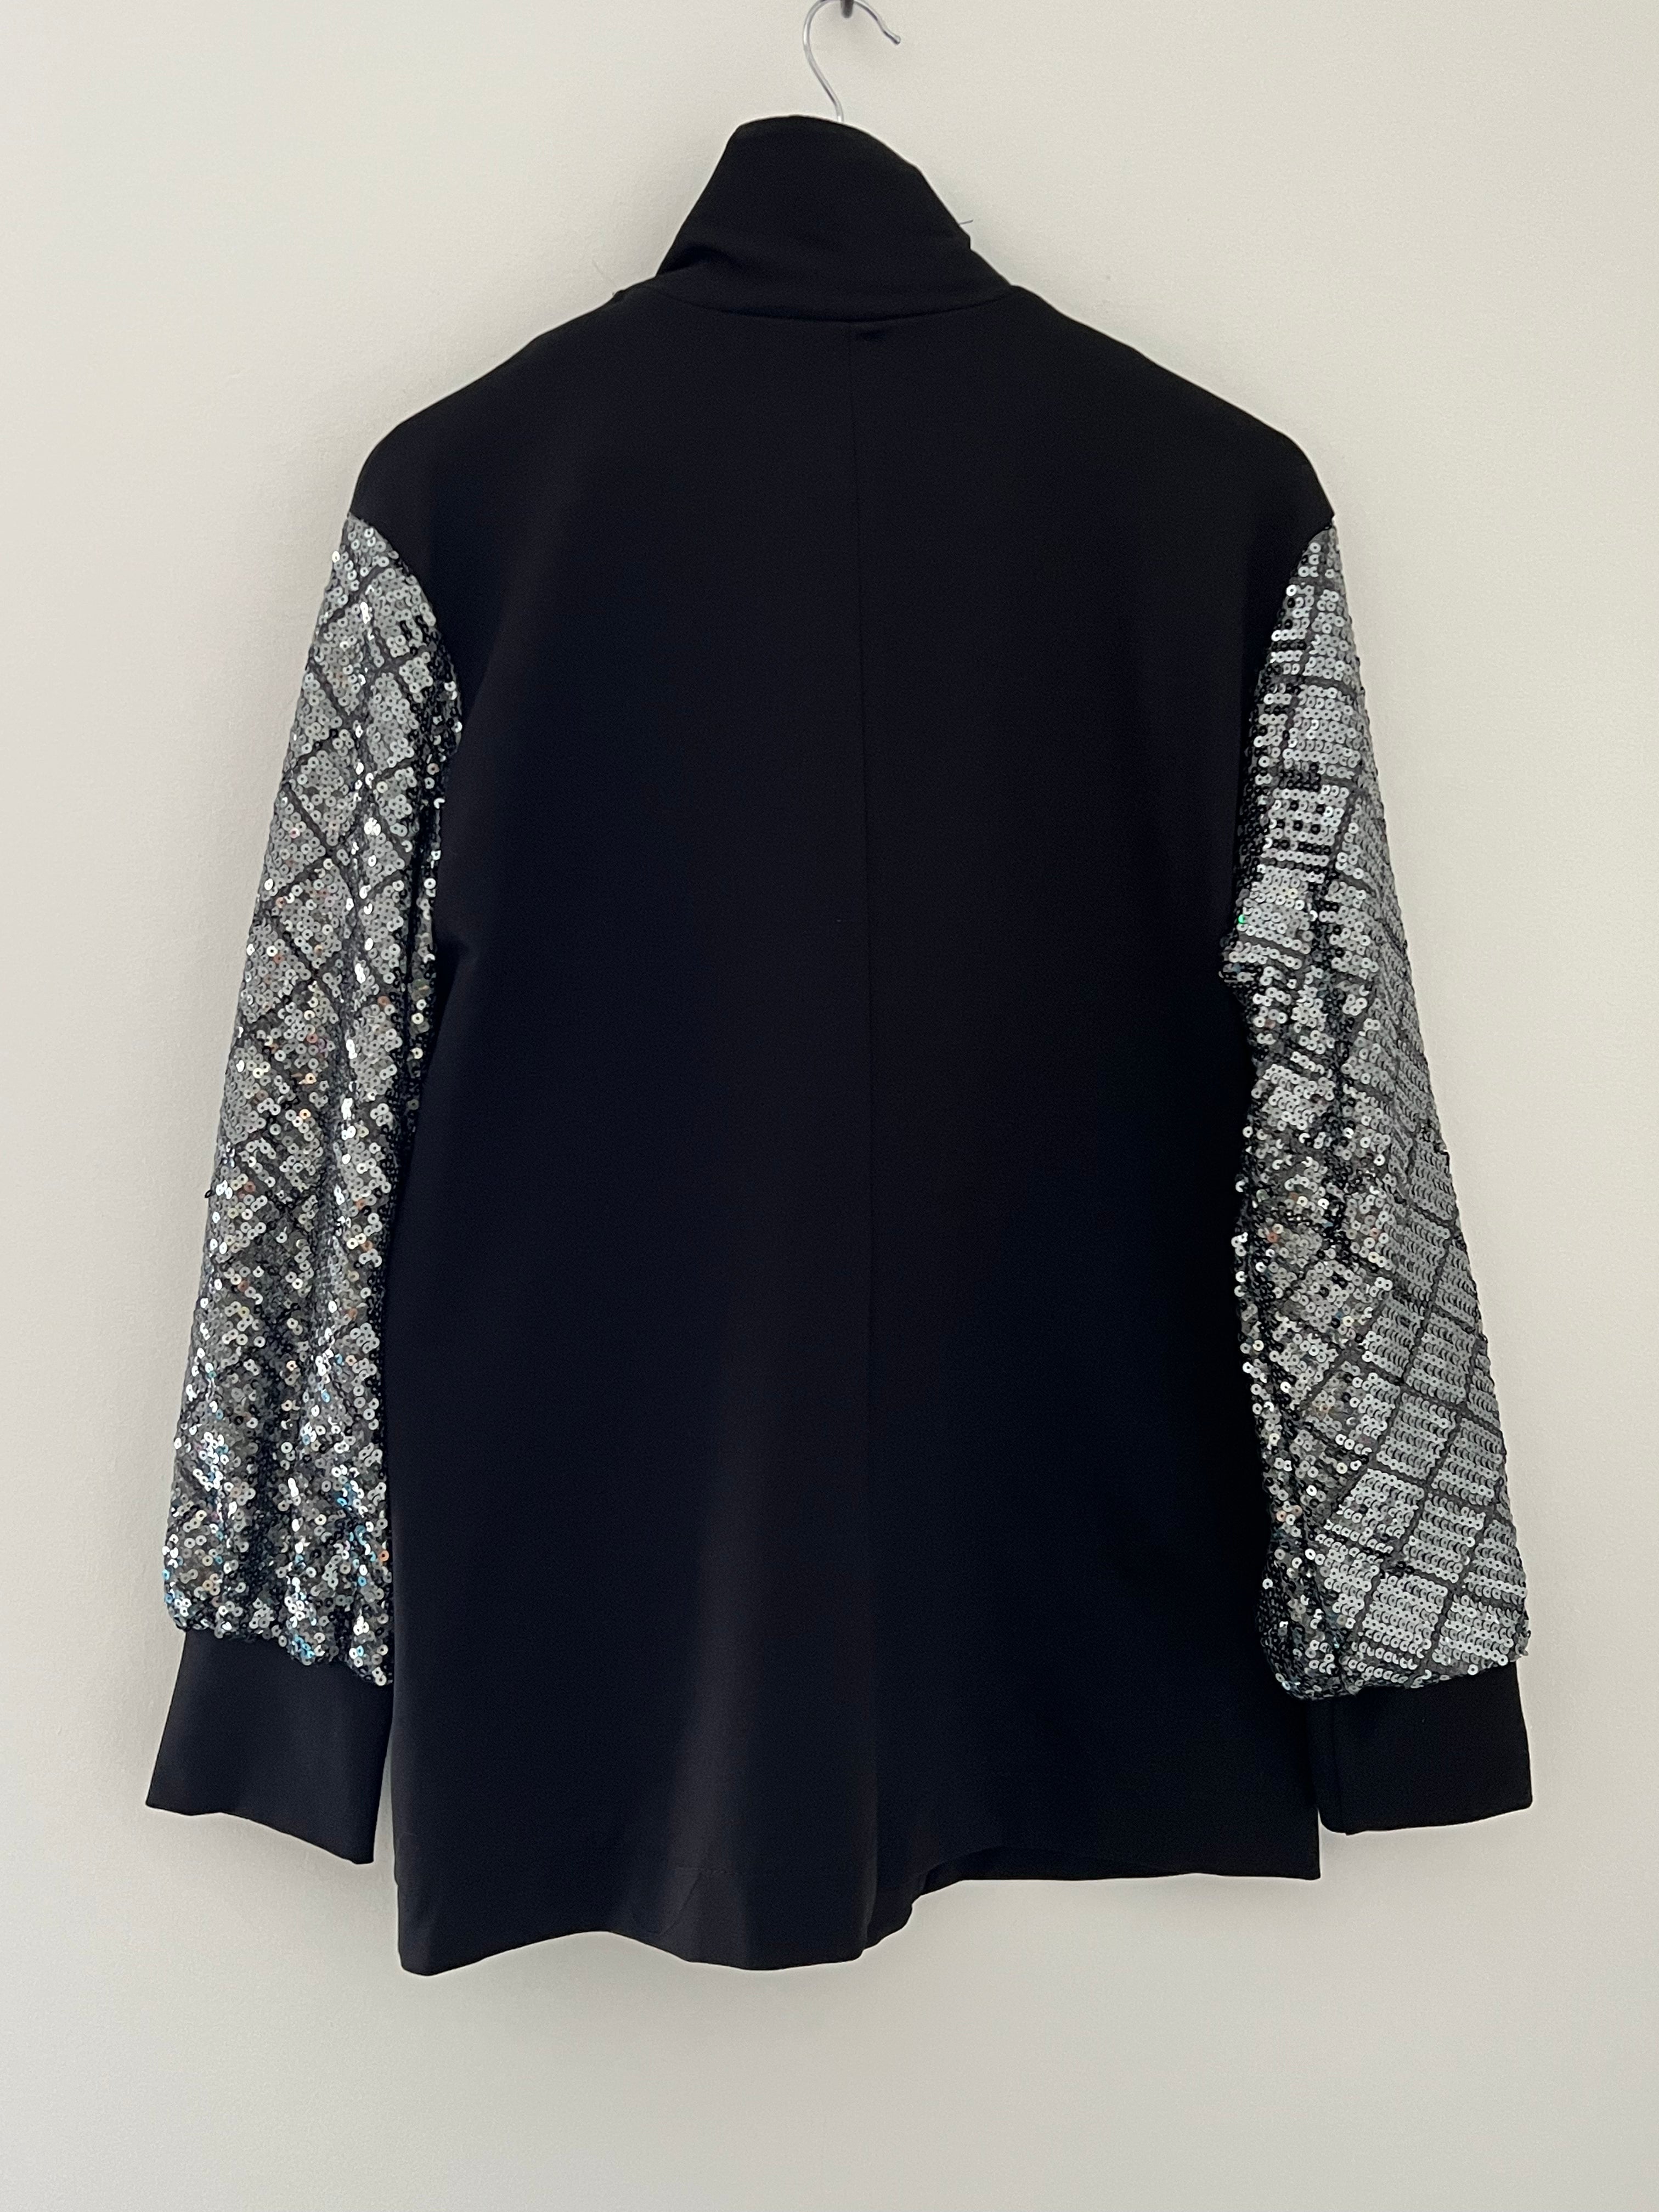 Sequin Blazer Jacket in Black & Silver